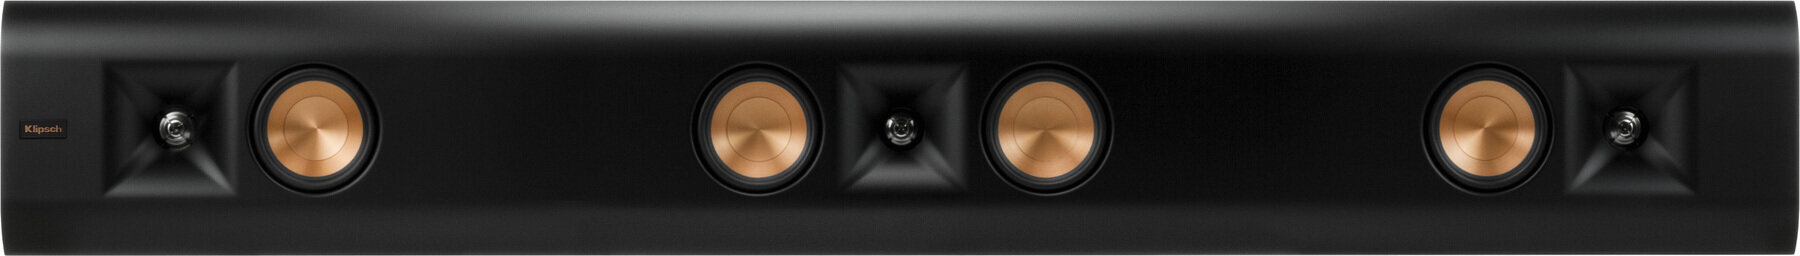 Głośnik naścienny Hi-Fi Klipsch RP-440D-Sb Black